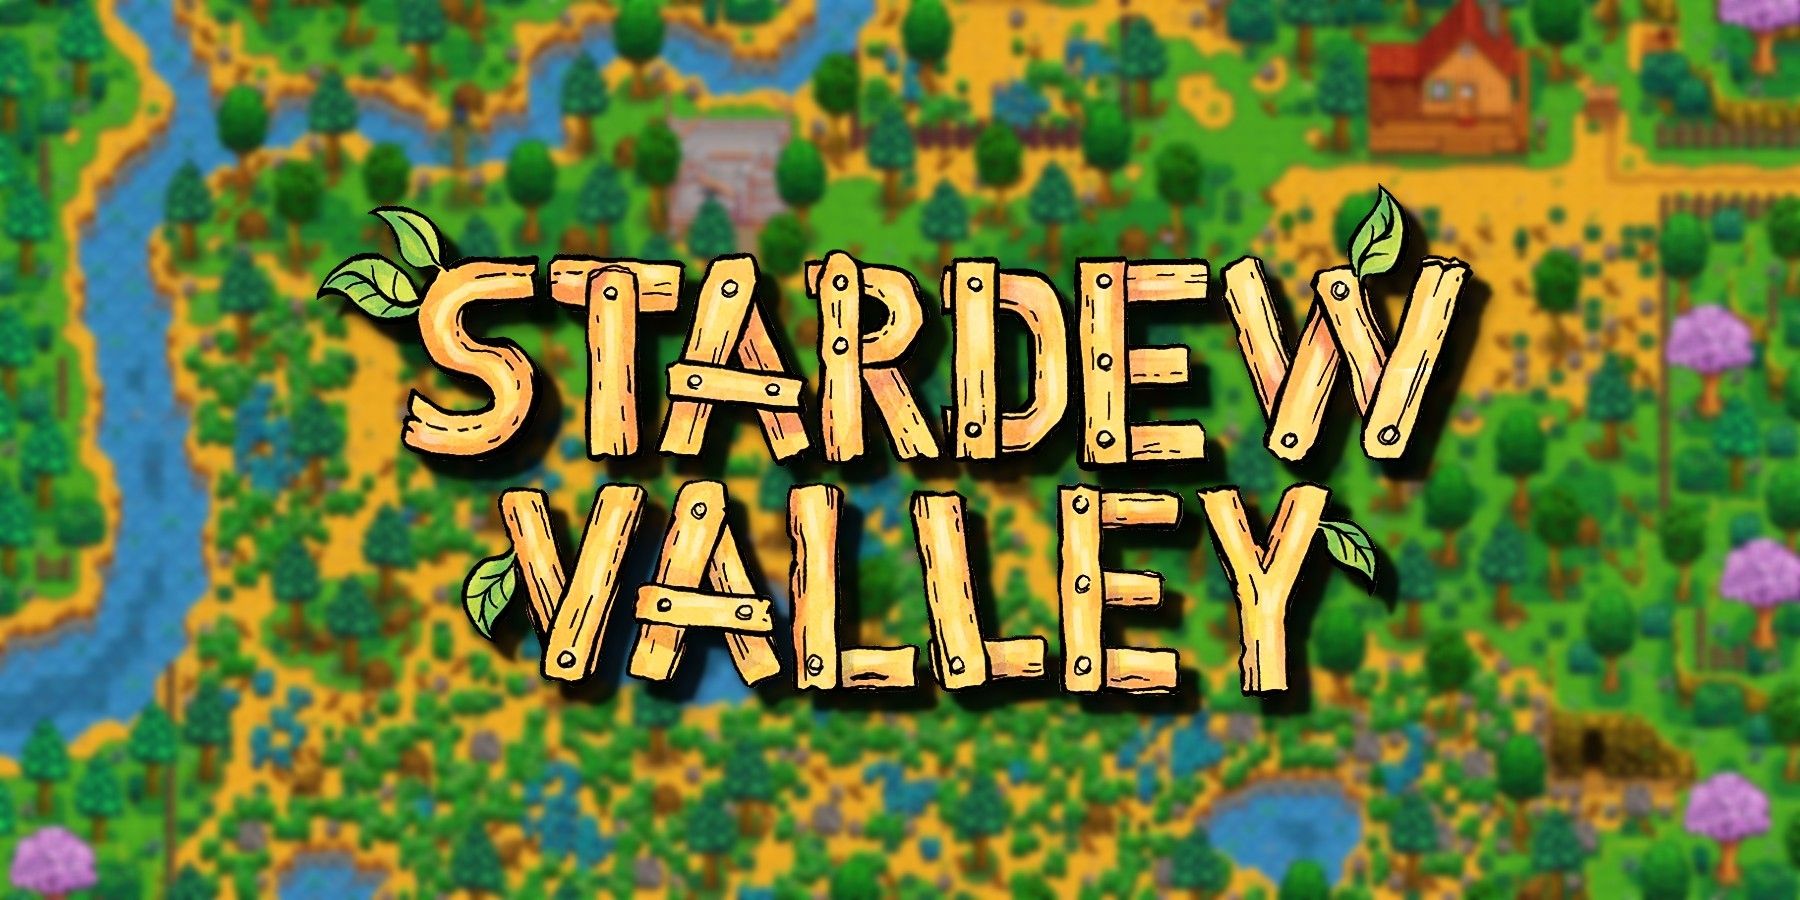 stardew-valley-logo-meadowlands-farm-blurred-background